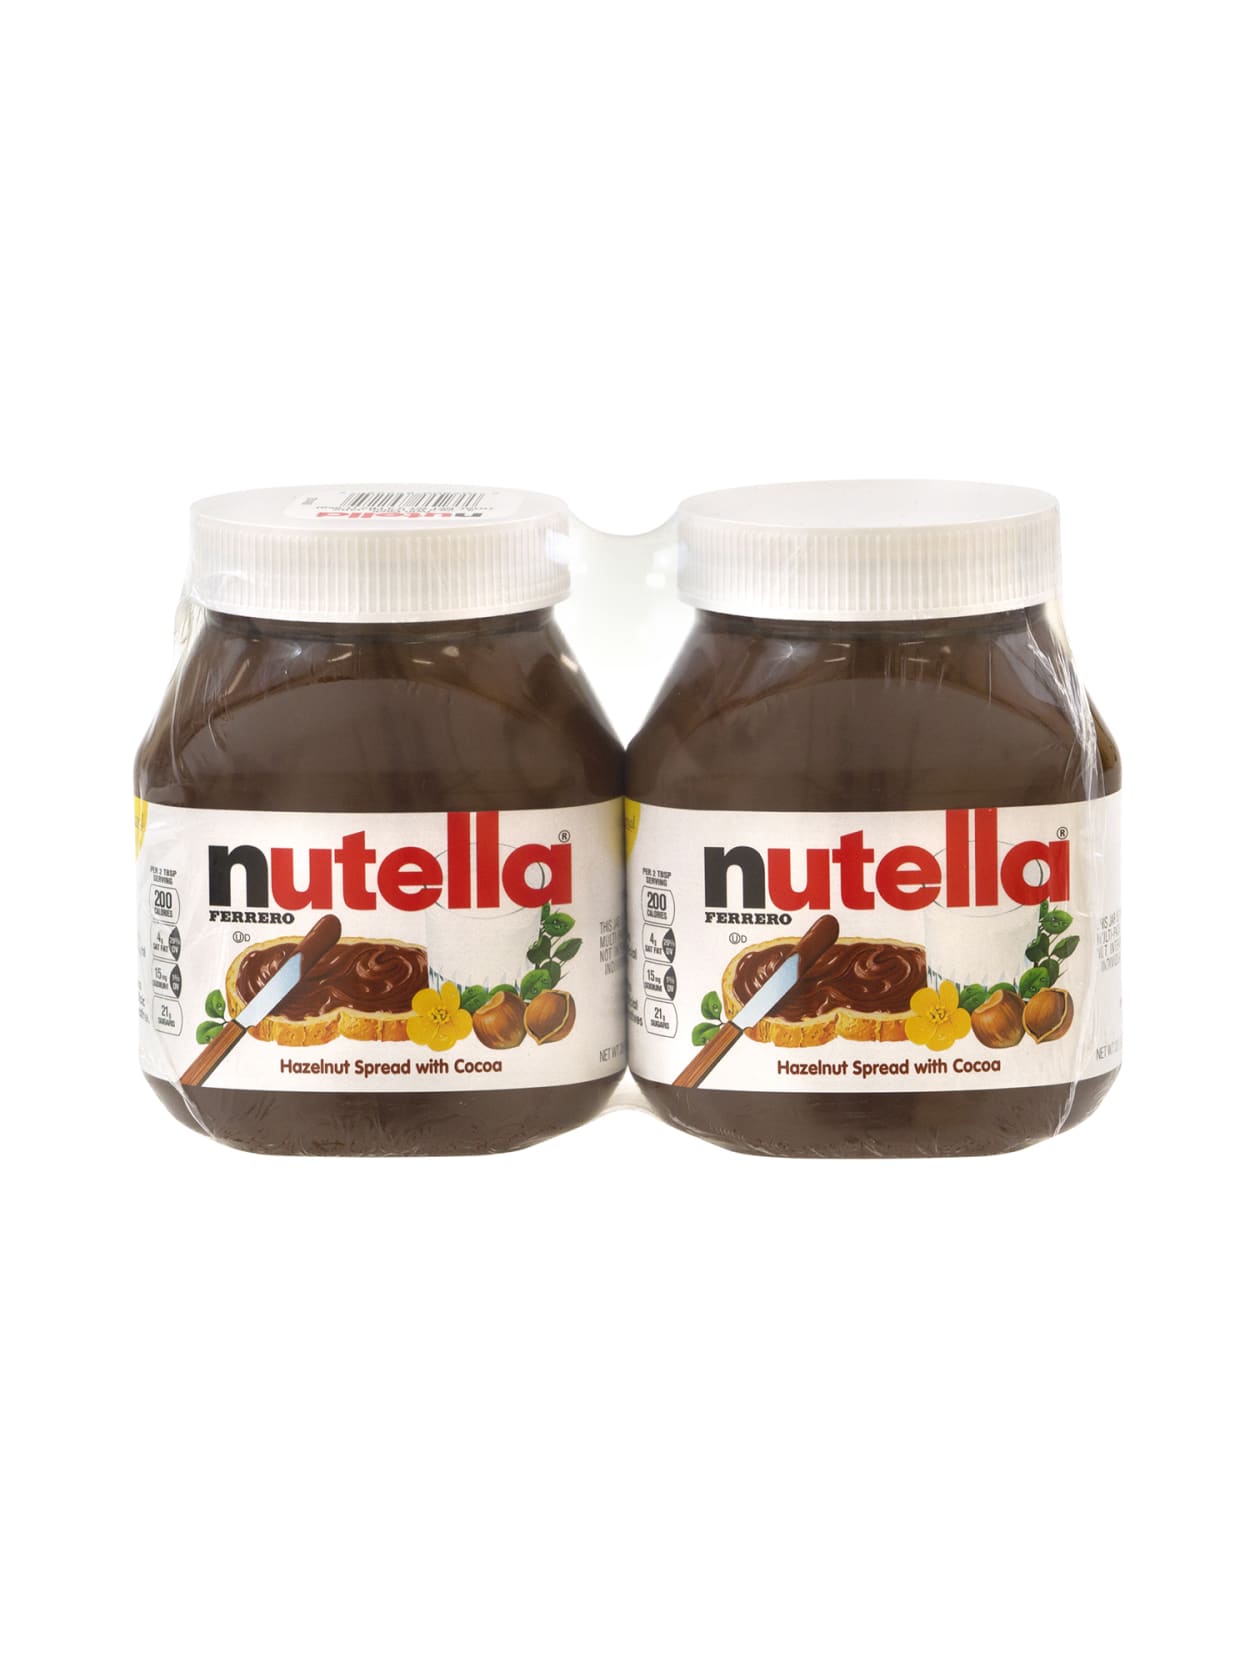 Nutella Hazelnut Spread 26 5 Oz Pack Of 2 Jars Office Depot